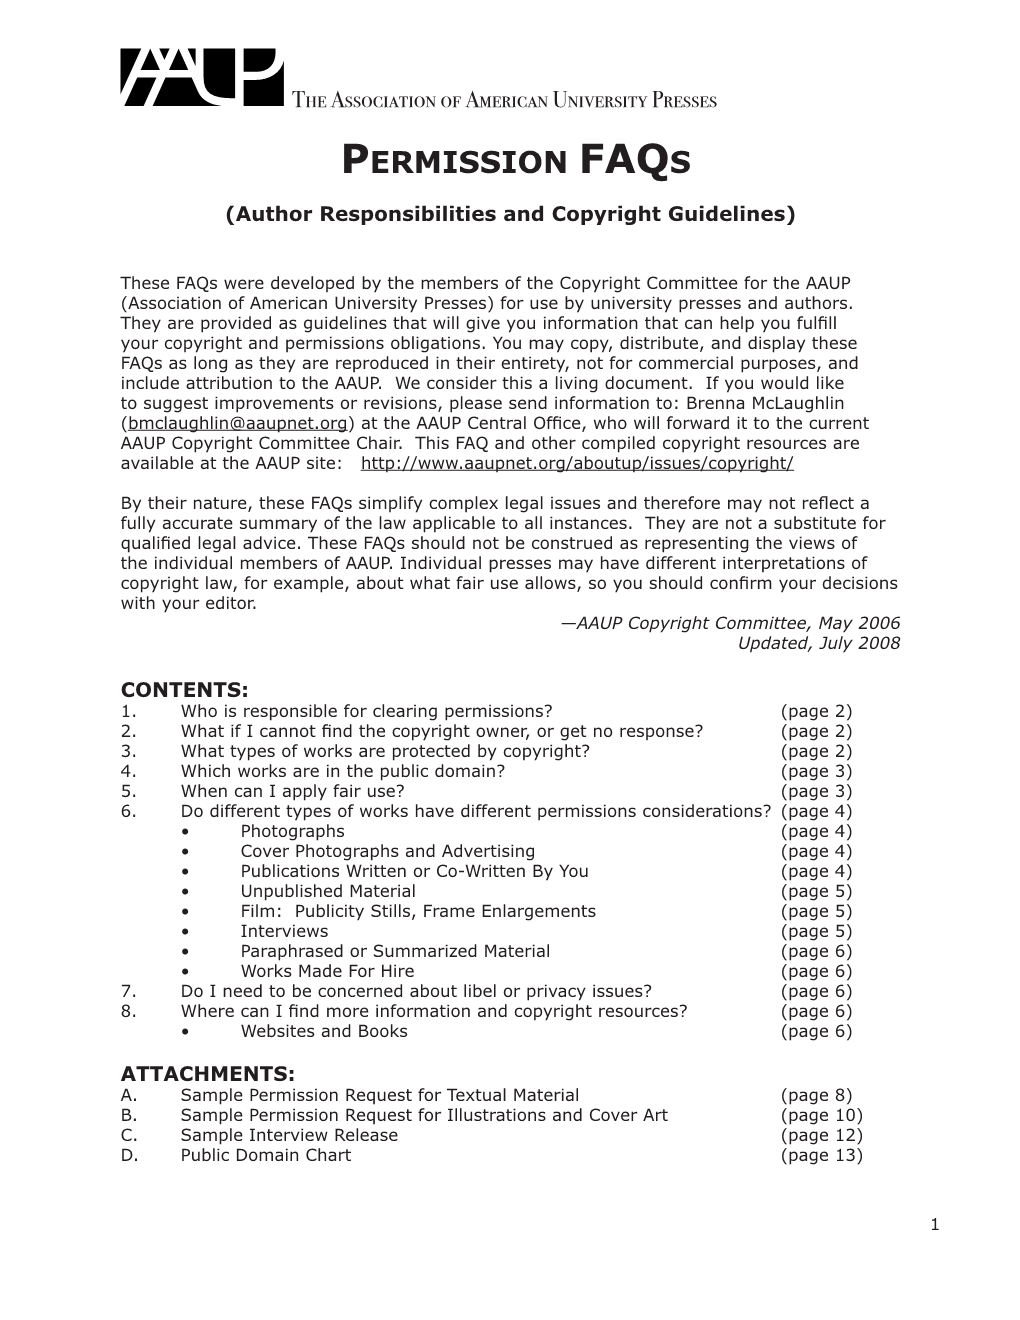 The Association of American University Presses Permission Faqs